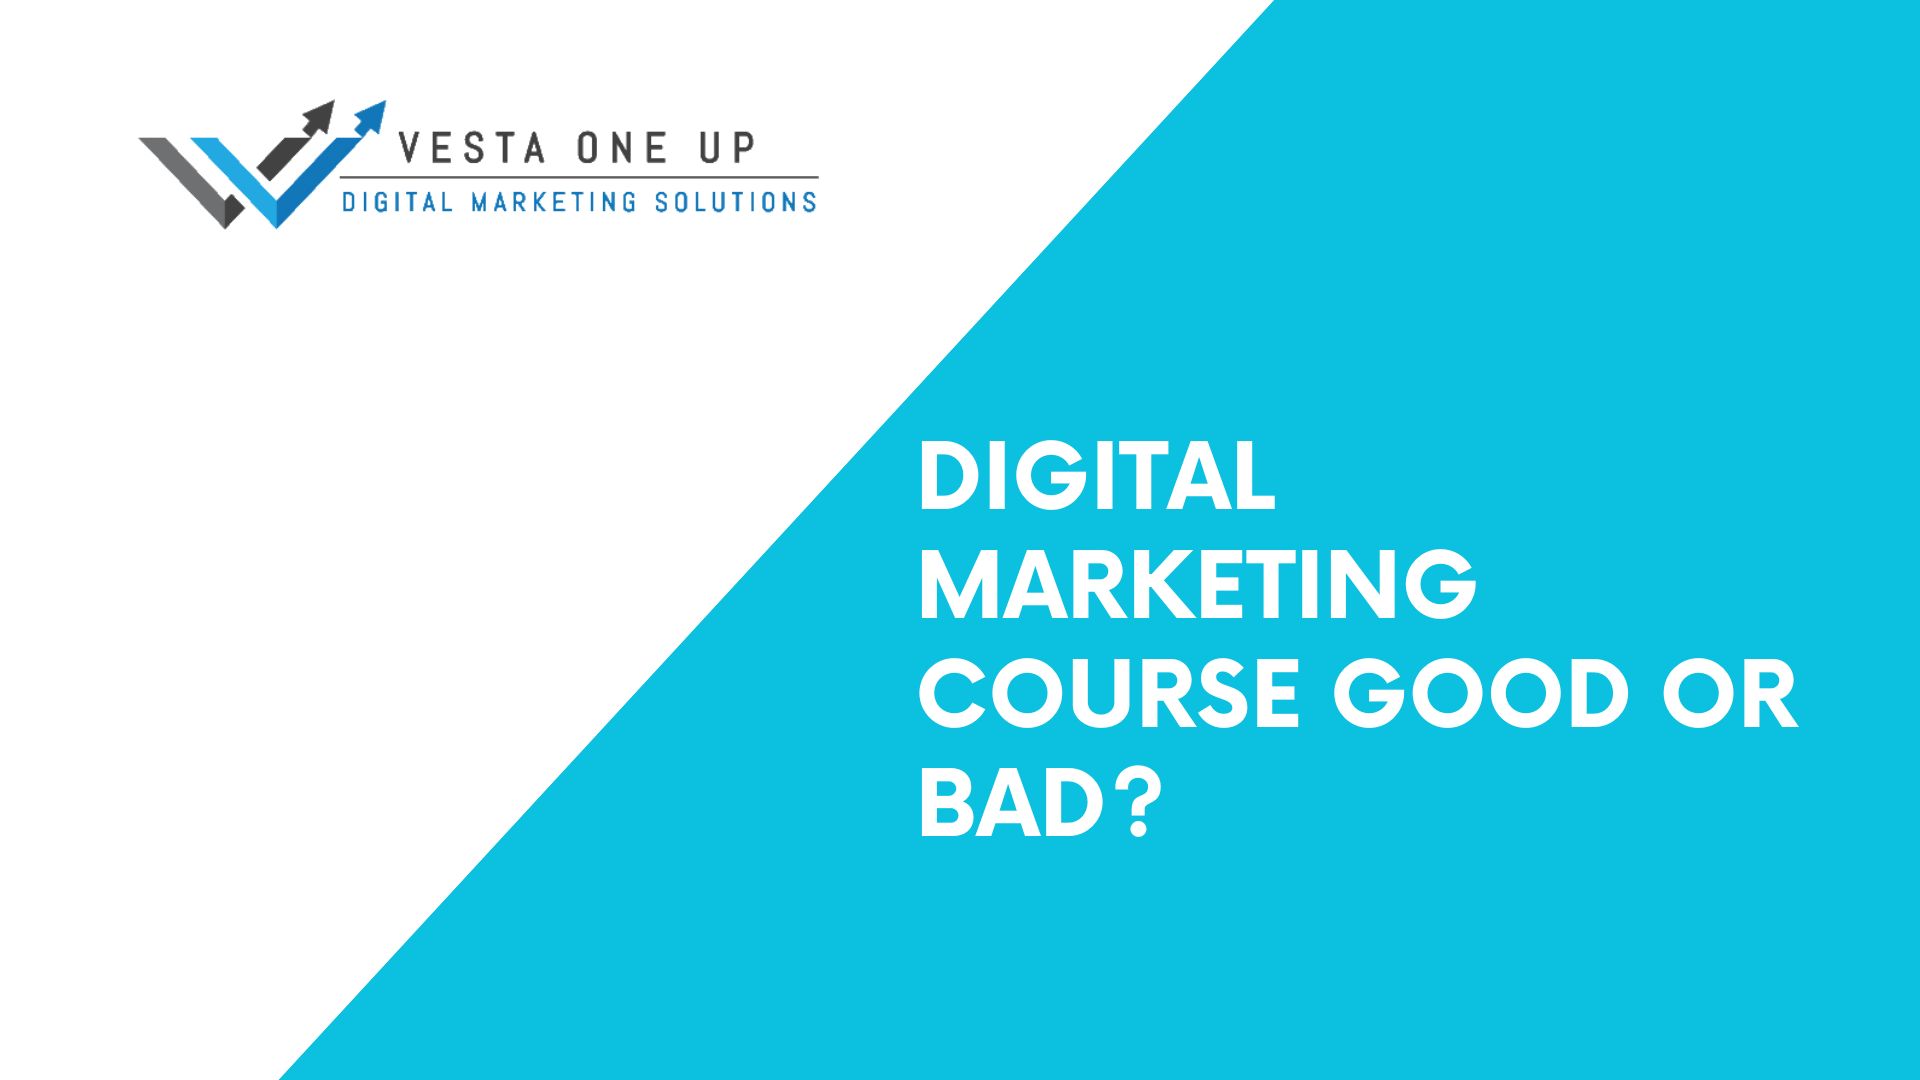 Digital marketing course good or bad?